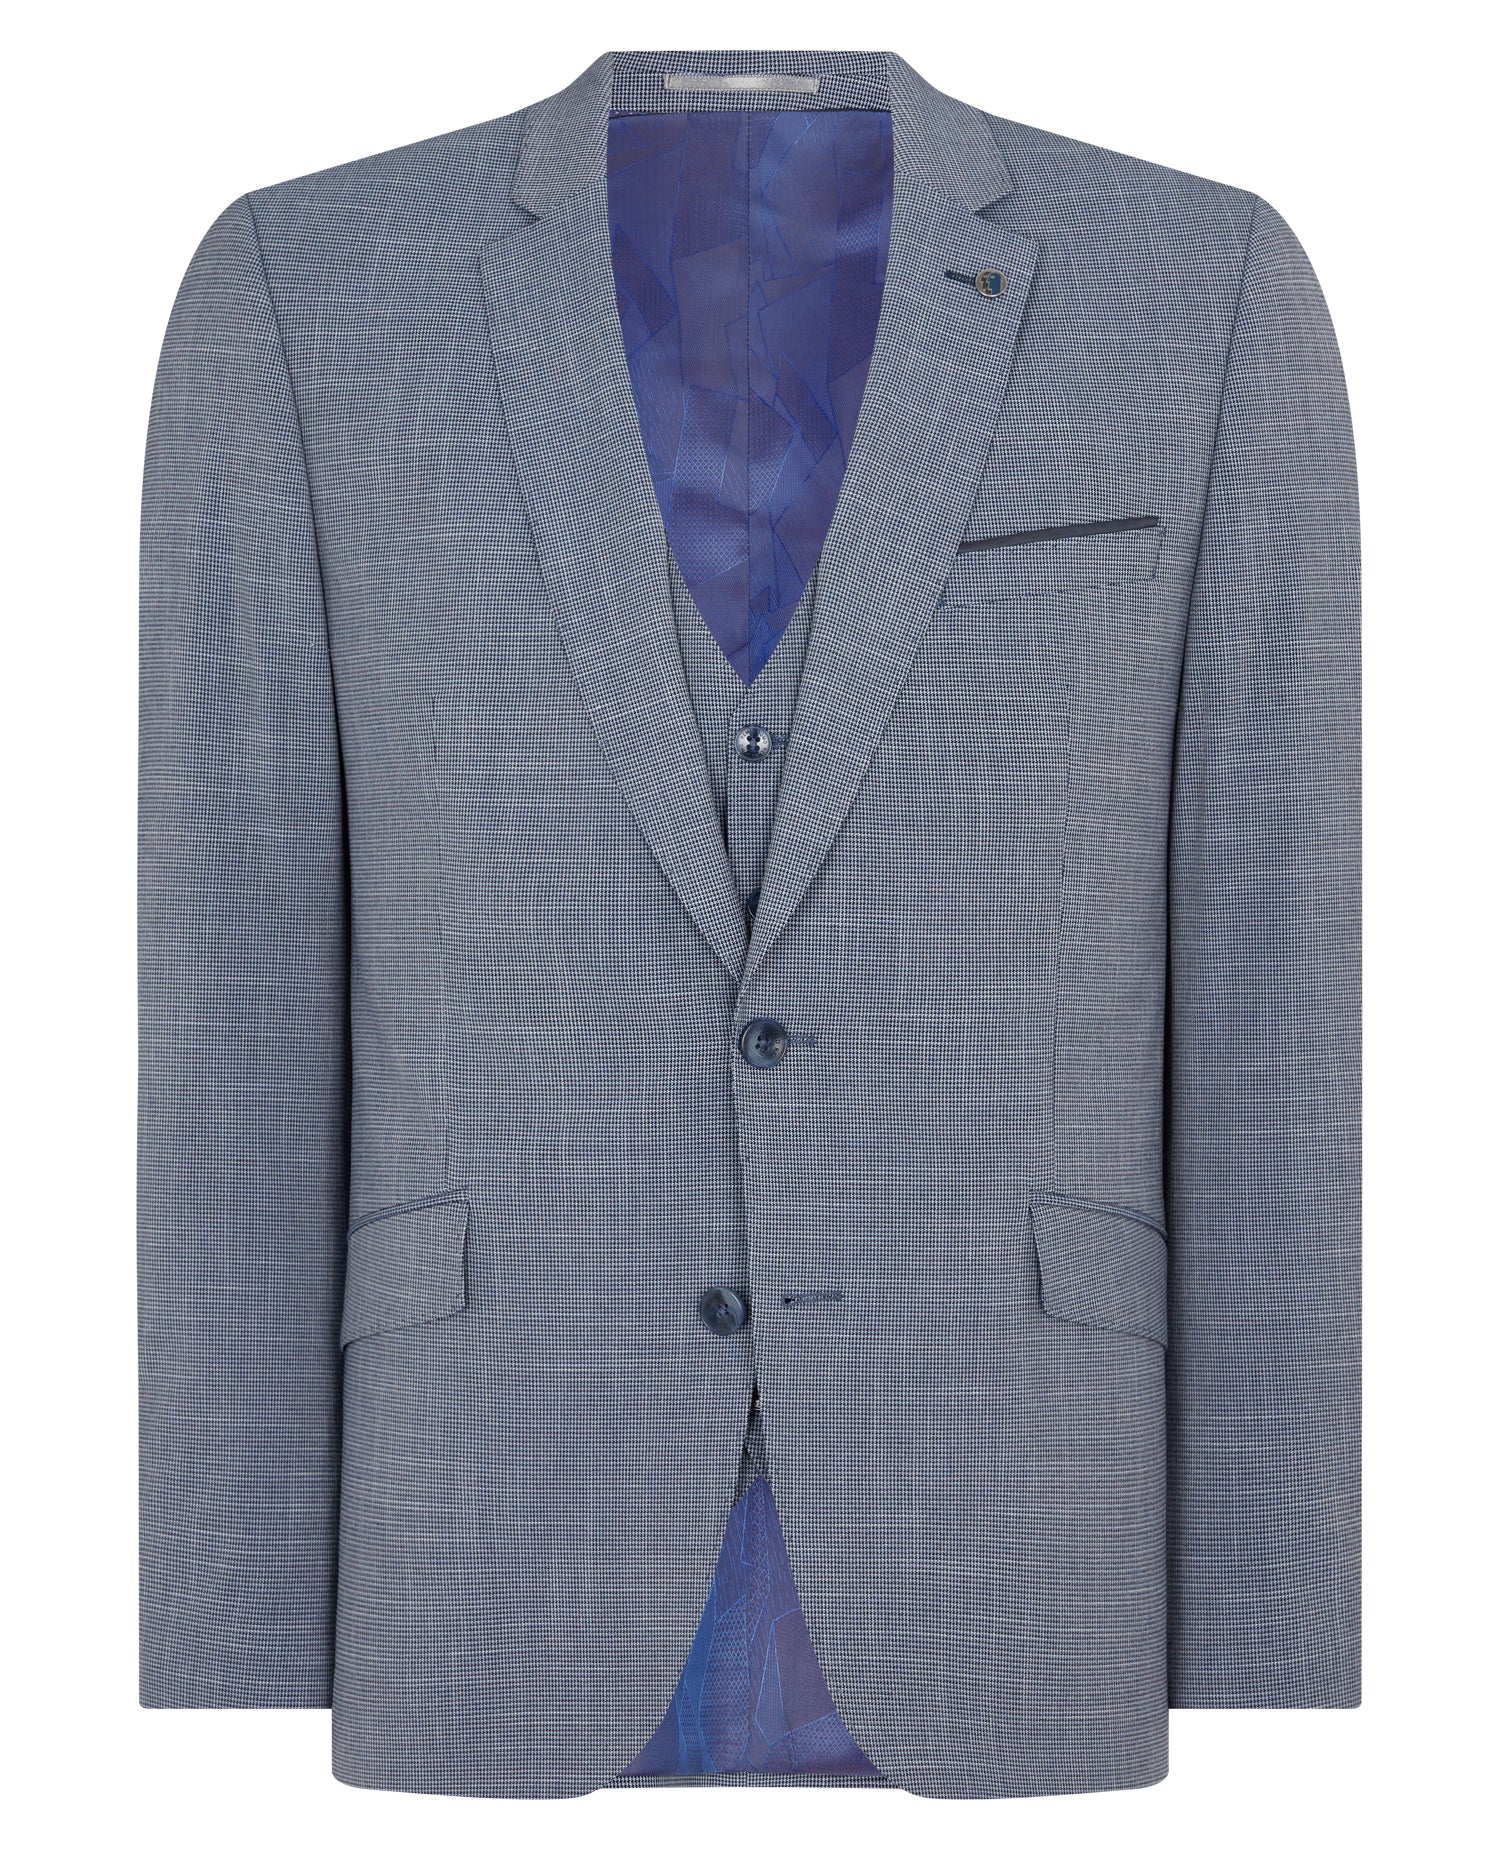 Remus Uomo Palucci Suit Jacket 12192 - Matt O'Brien Fashions